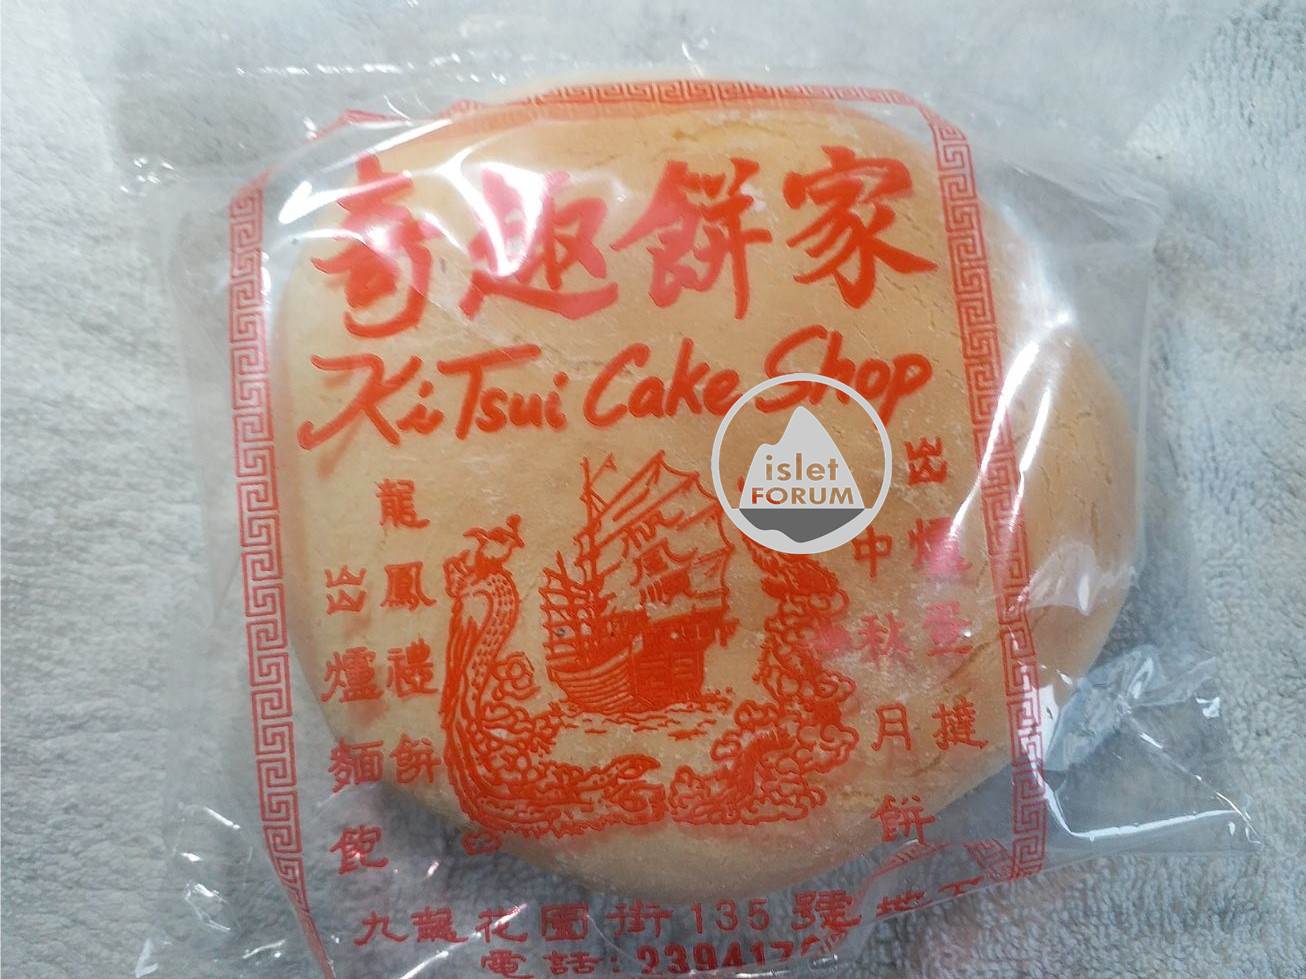 奇趣餅家Kee Tsui Cake Shop (1).jpg